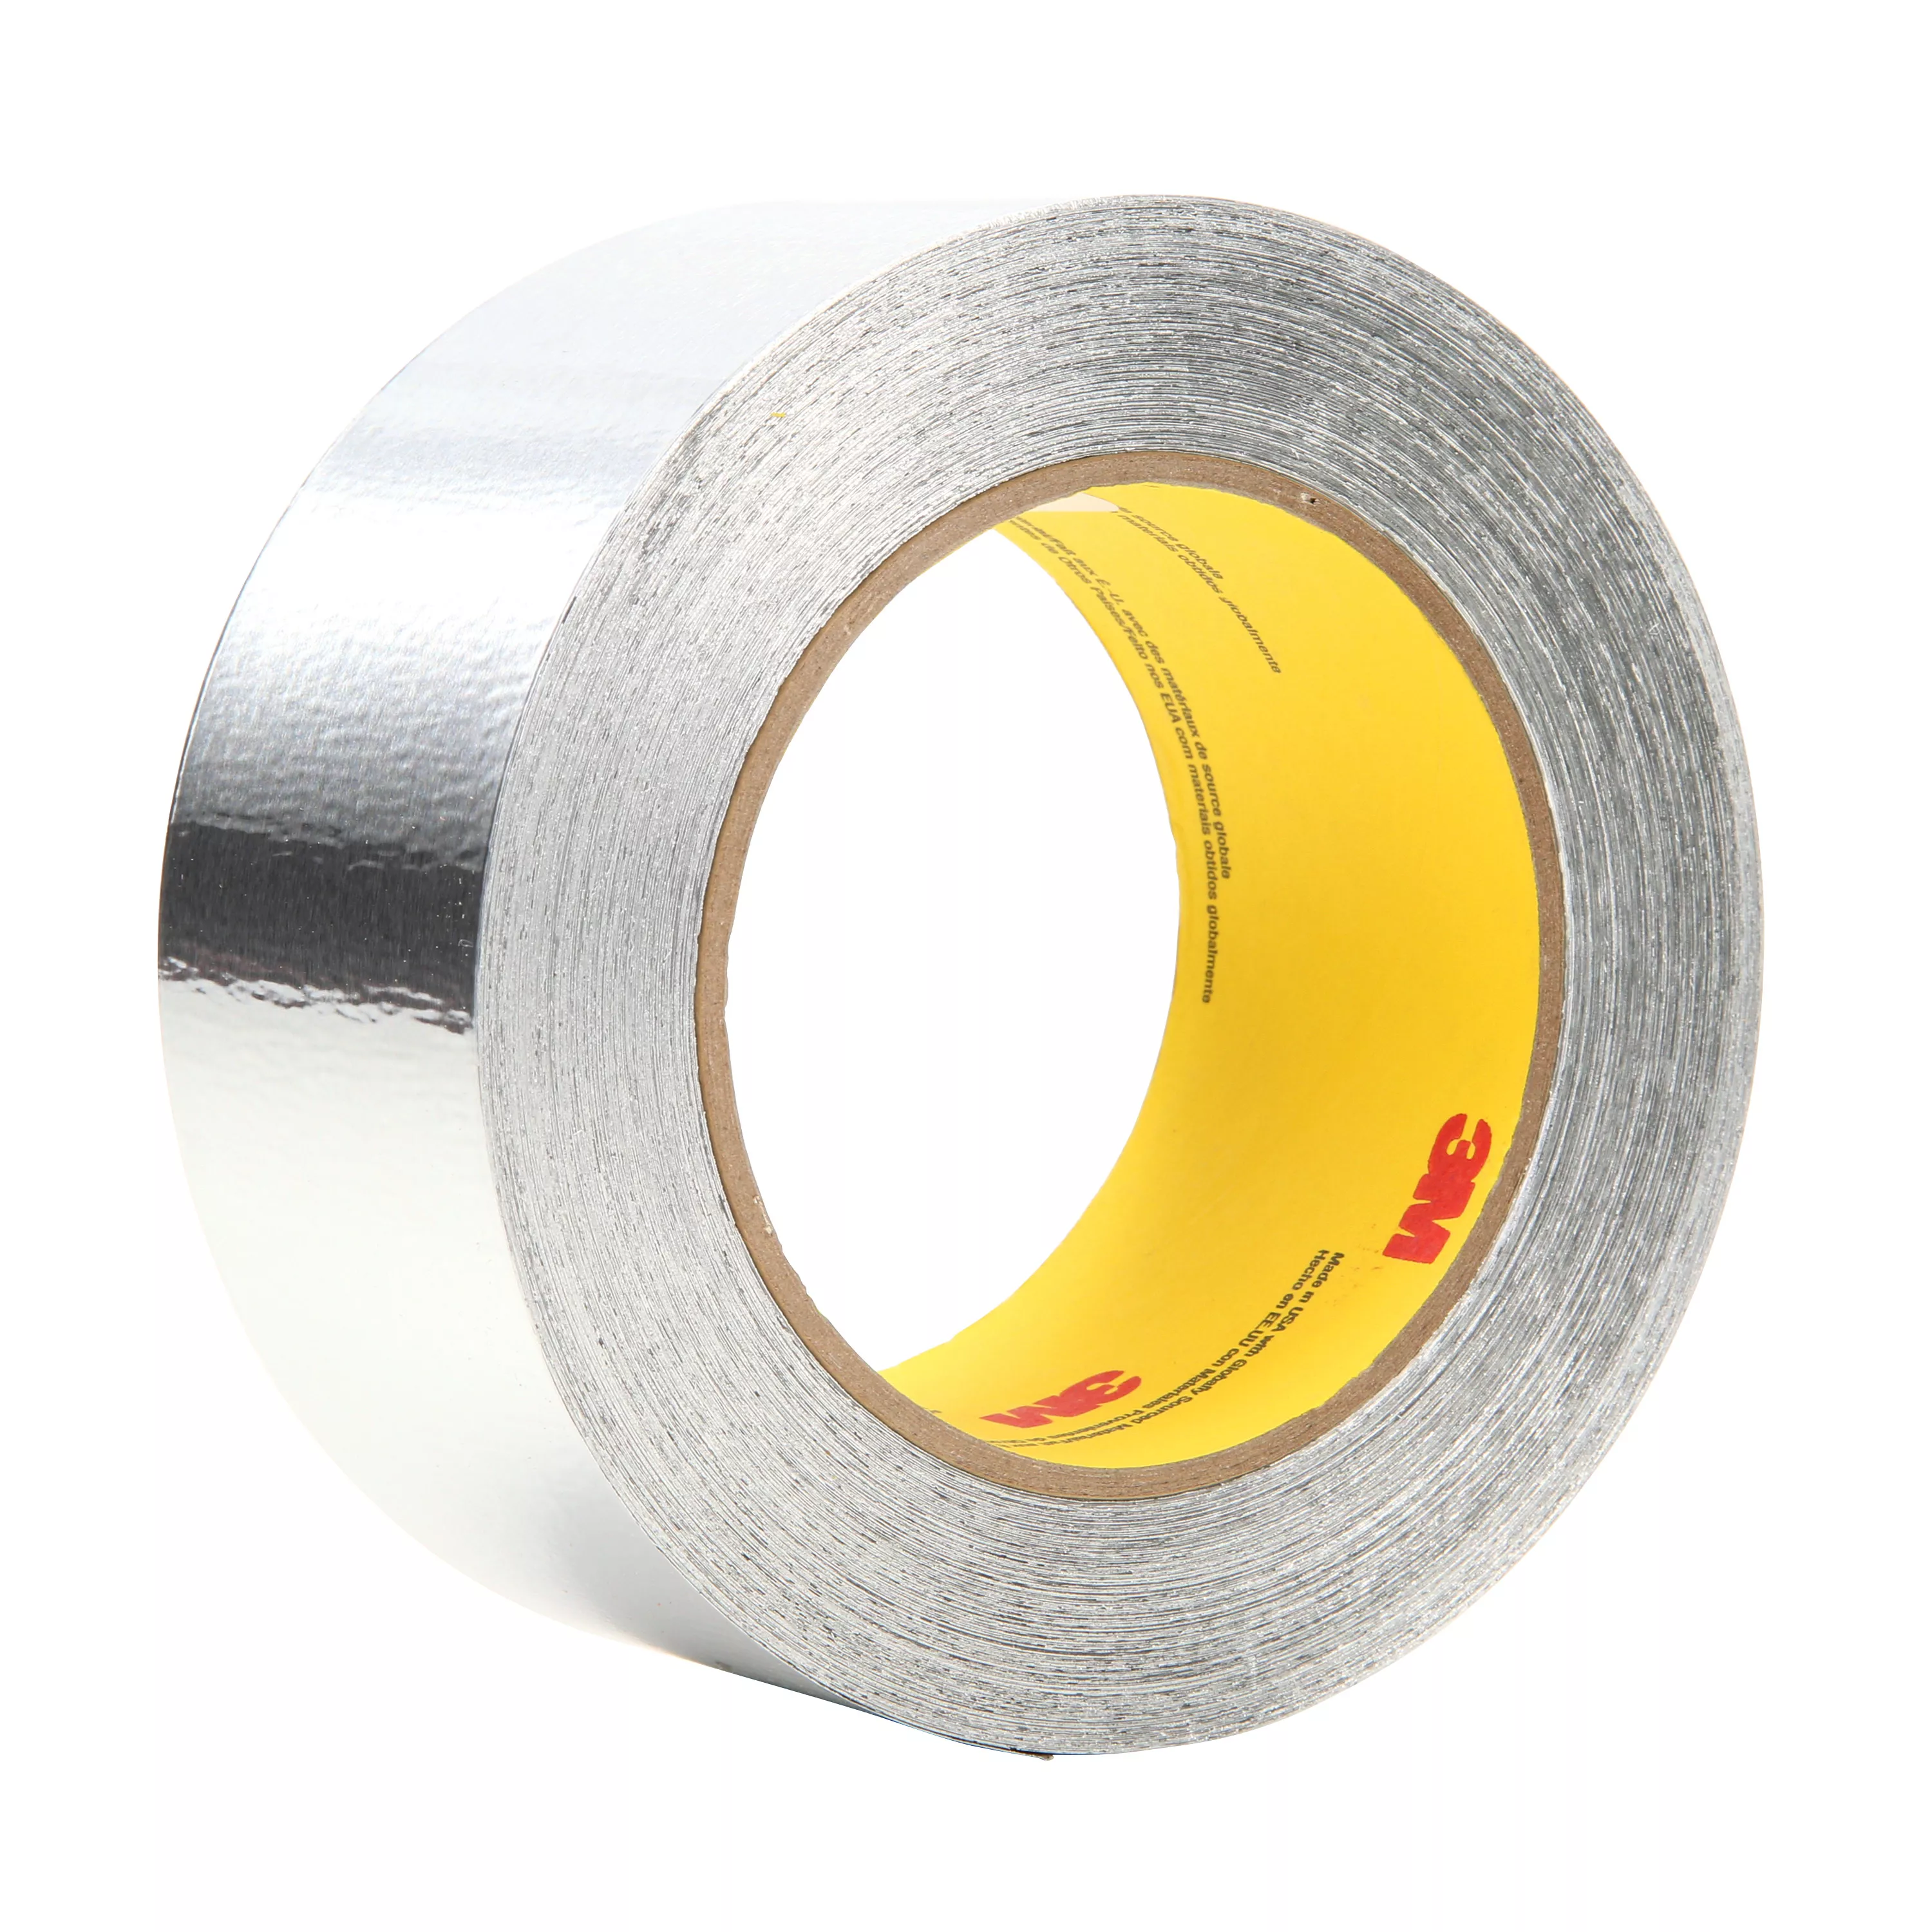 3M™ Aluminum Foil Tape 425, Silver, 2 in x 60 yd, 4.6 mil, 24
Rolls/Case, Plastic Core